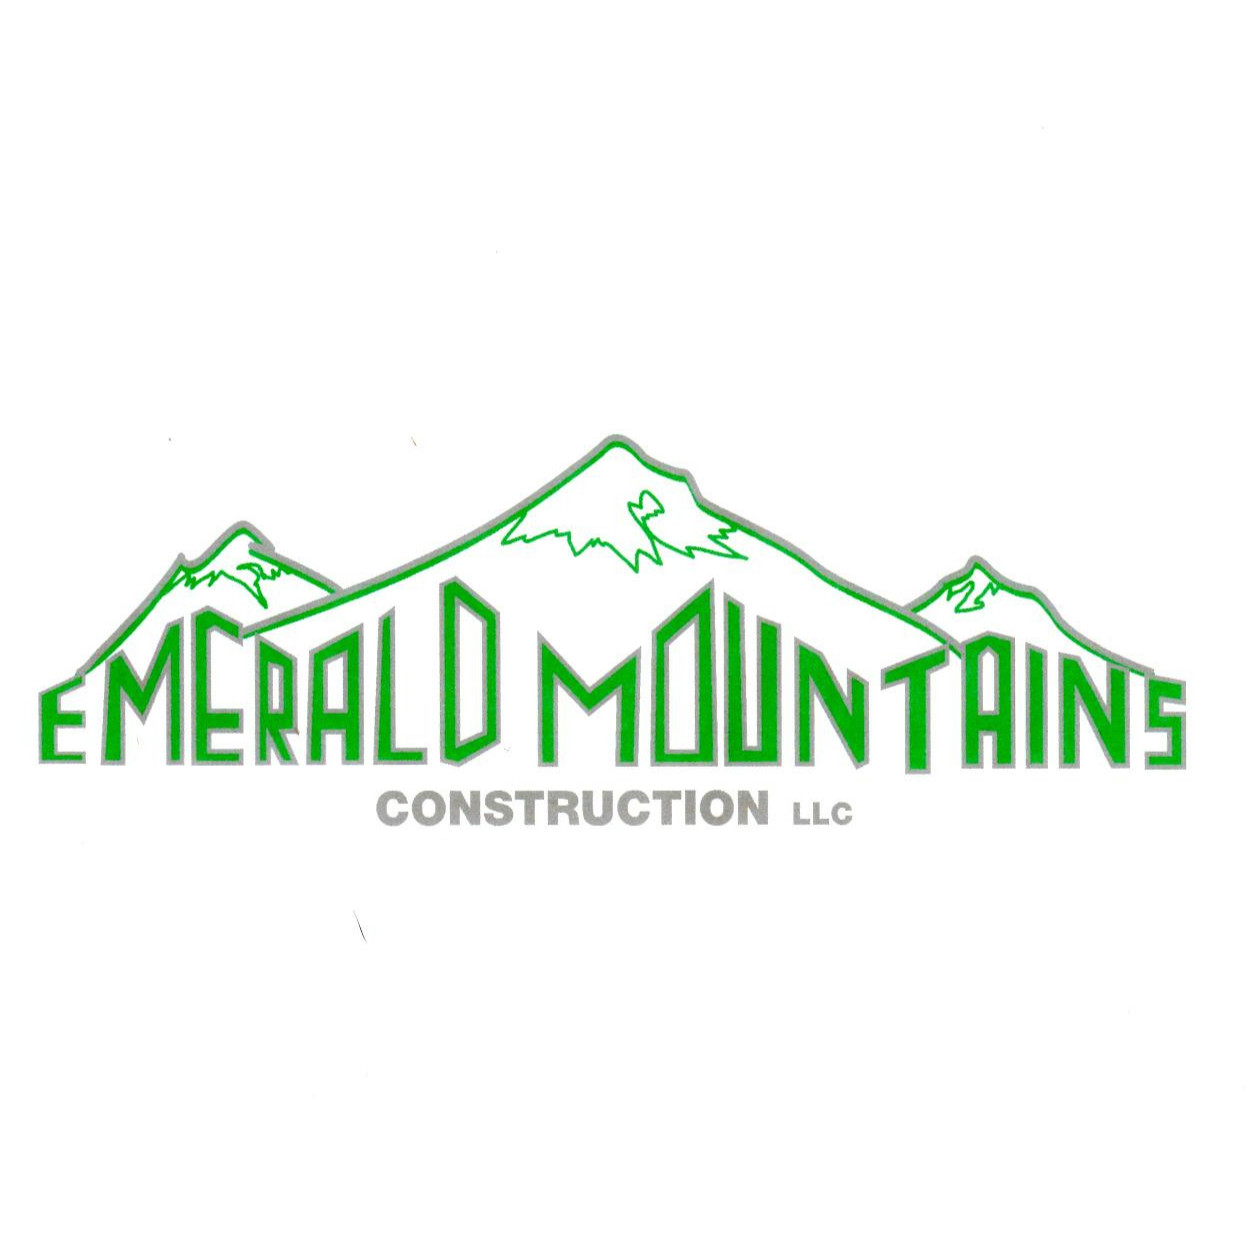 Emerald Mountains Construction, LLC